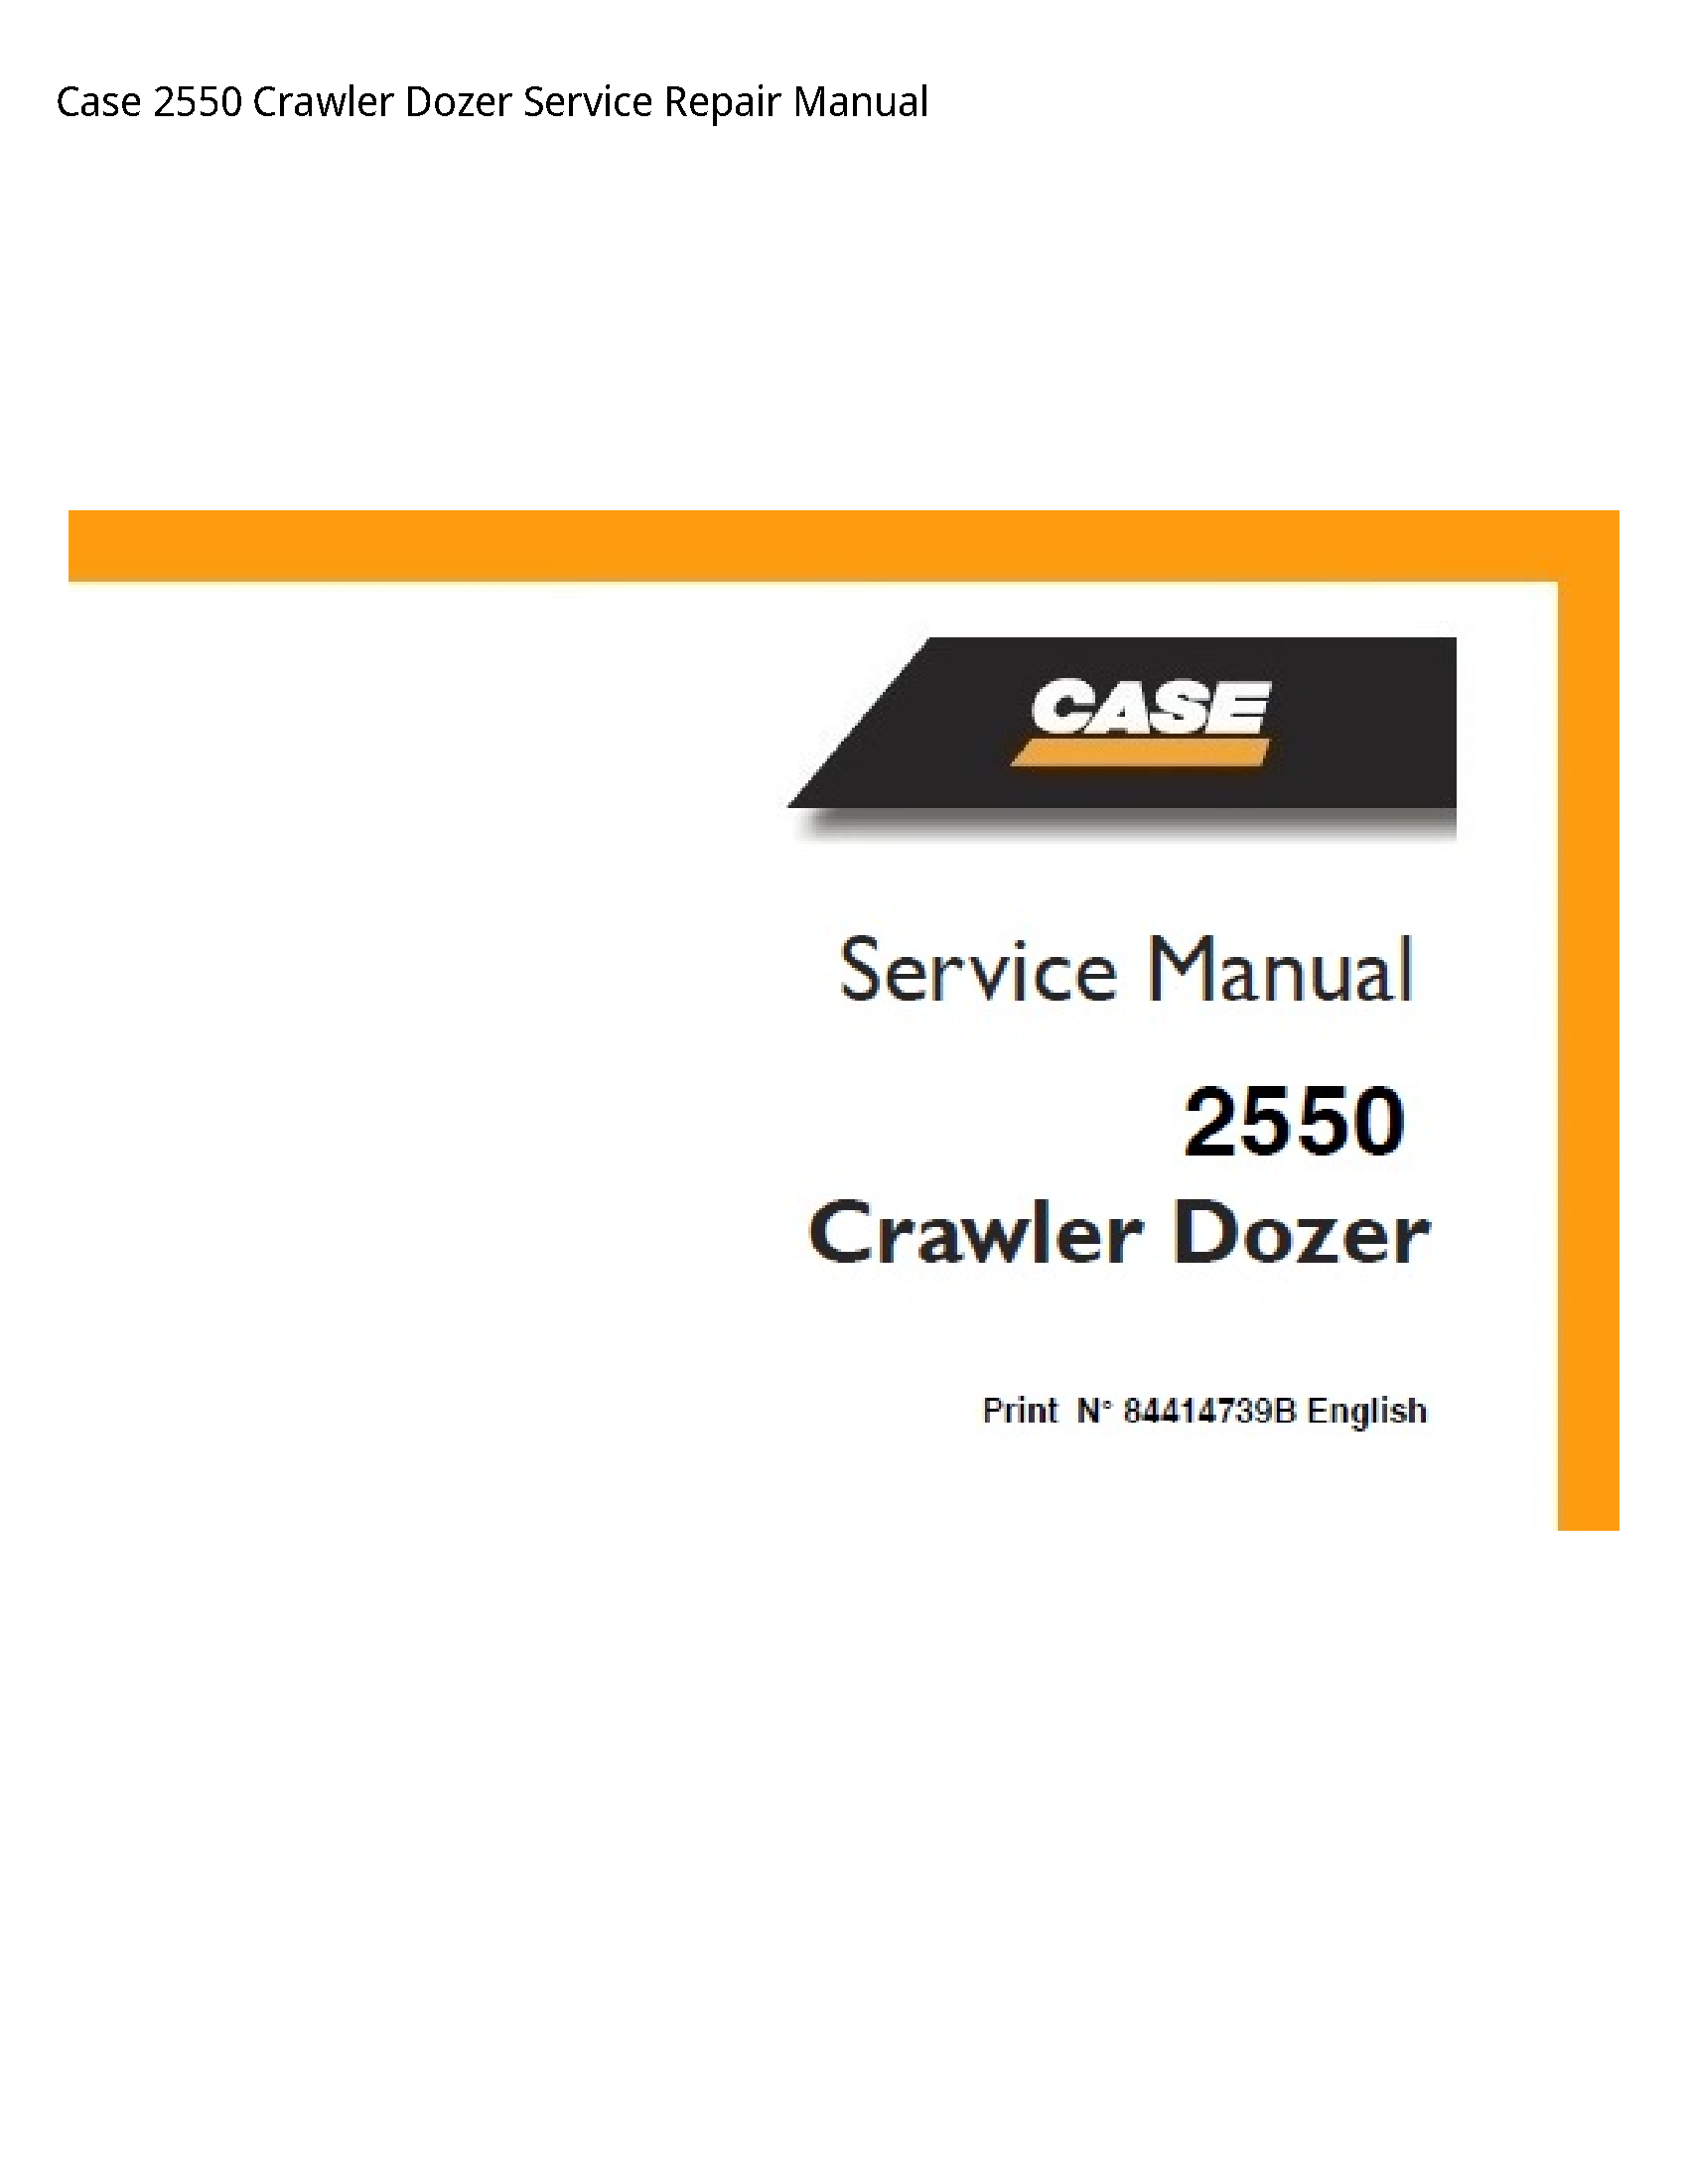 Case/Case IH 2550 Crawler Dozer manual